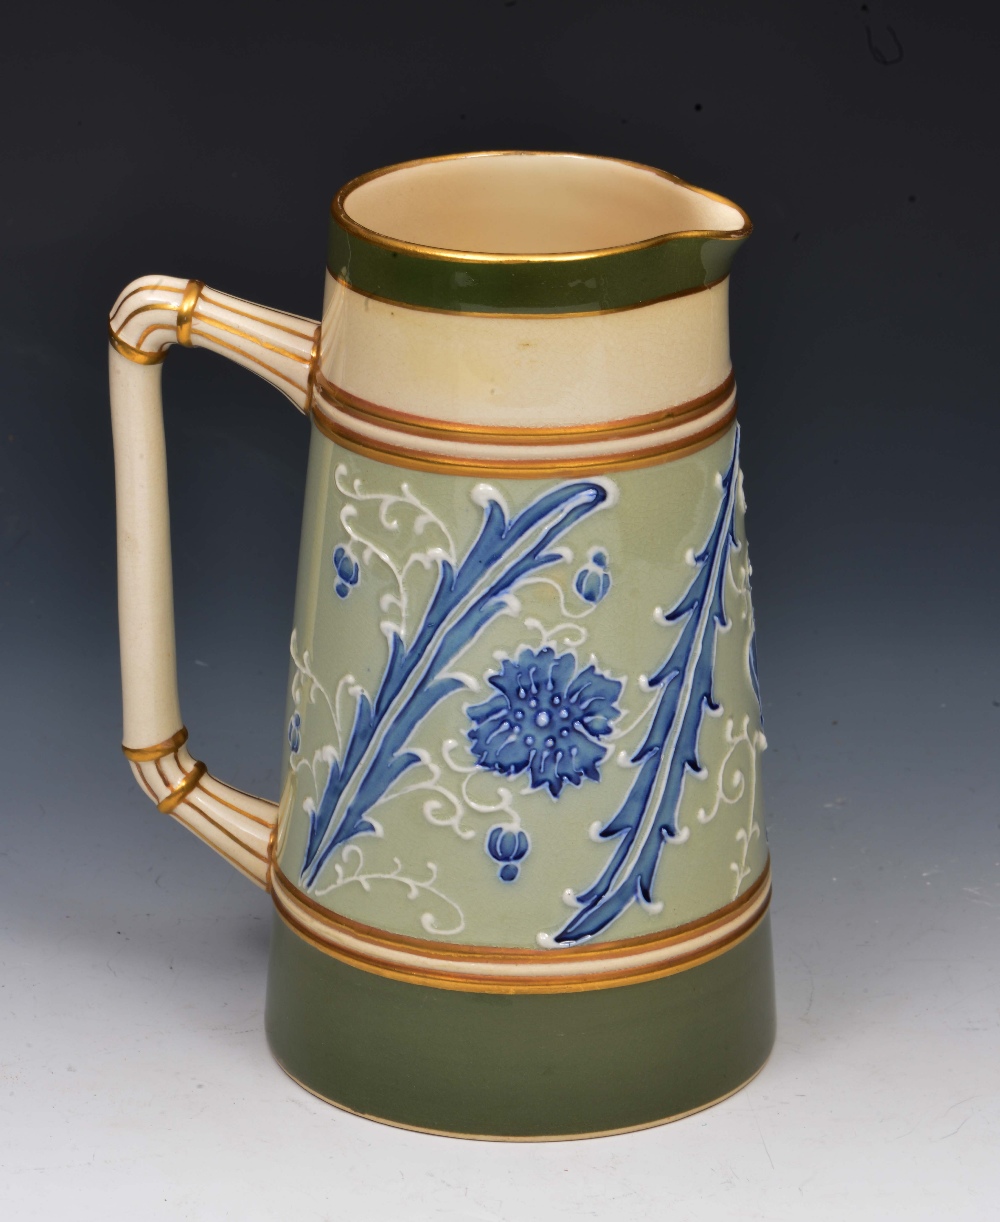 William Moorcroft (British, 1872-1945) Florianware jug made for James Macintyre & Co in the lorne